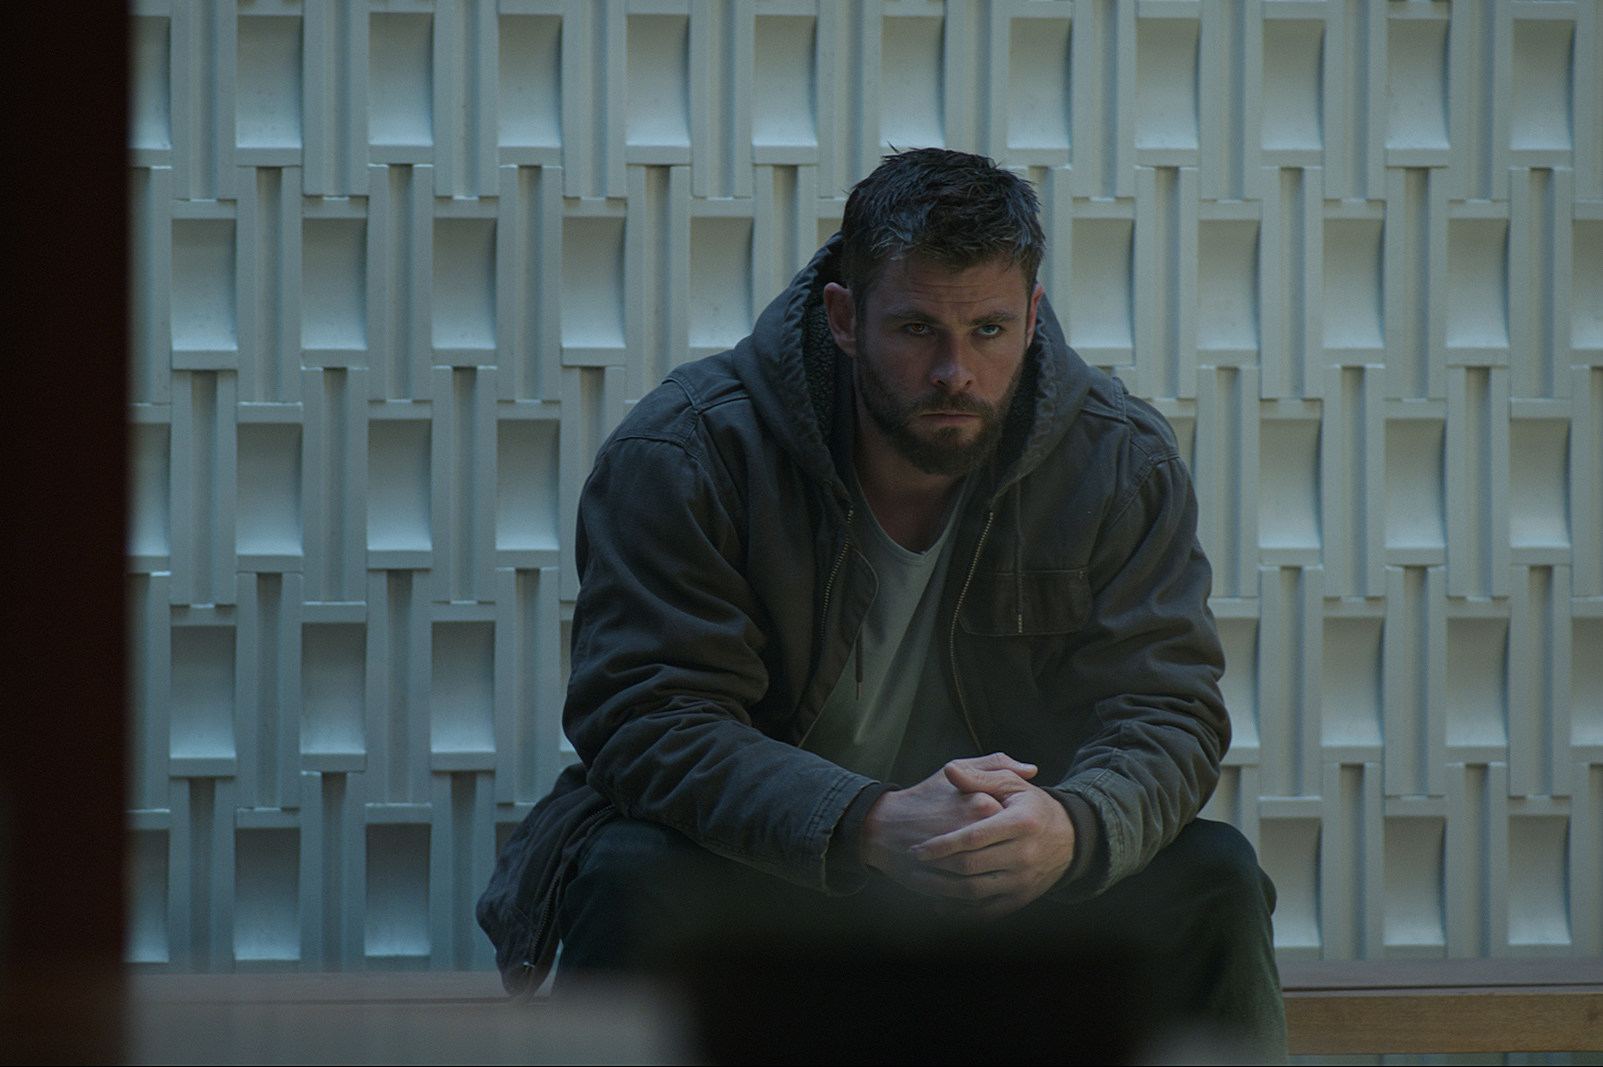 See Avengers Star Chris Hemsworth With Impressive Valhalla Thor